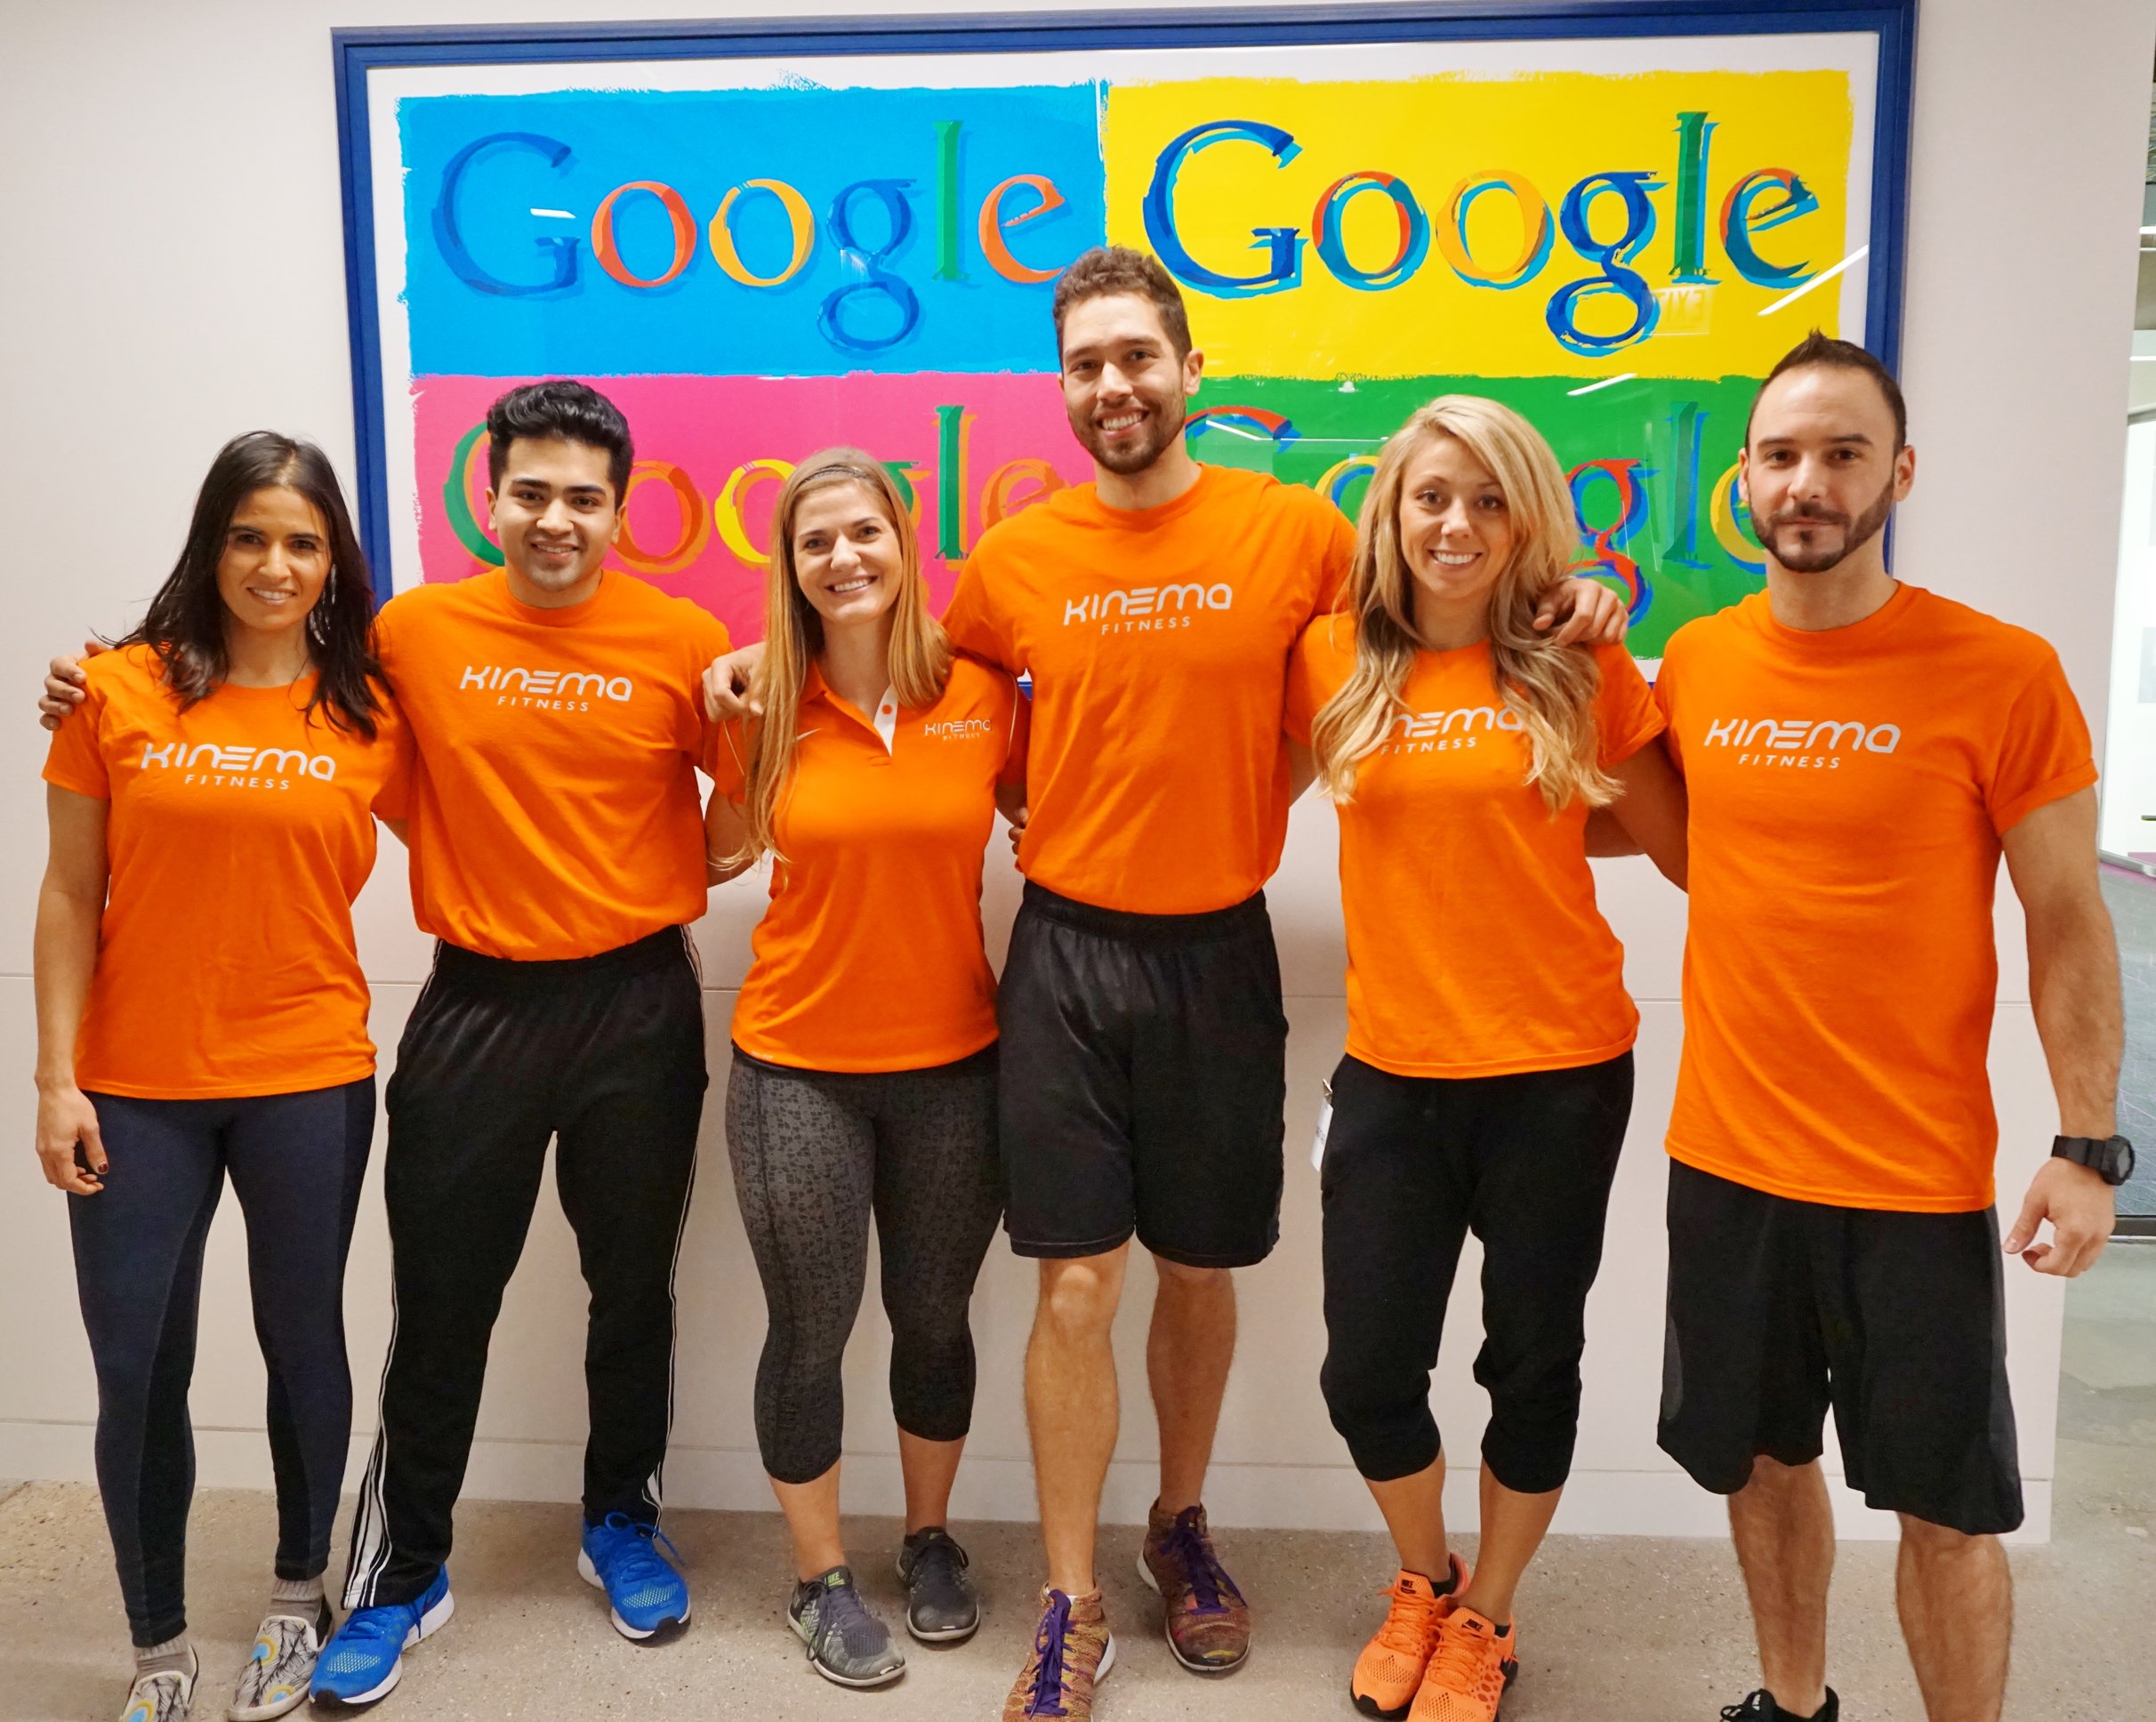 Google Launch Party Kinema Fitness